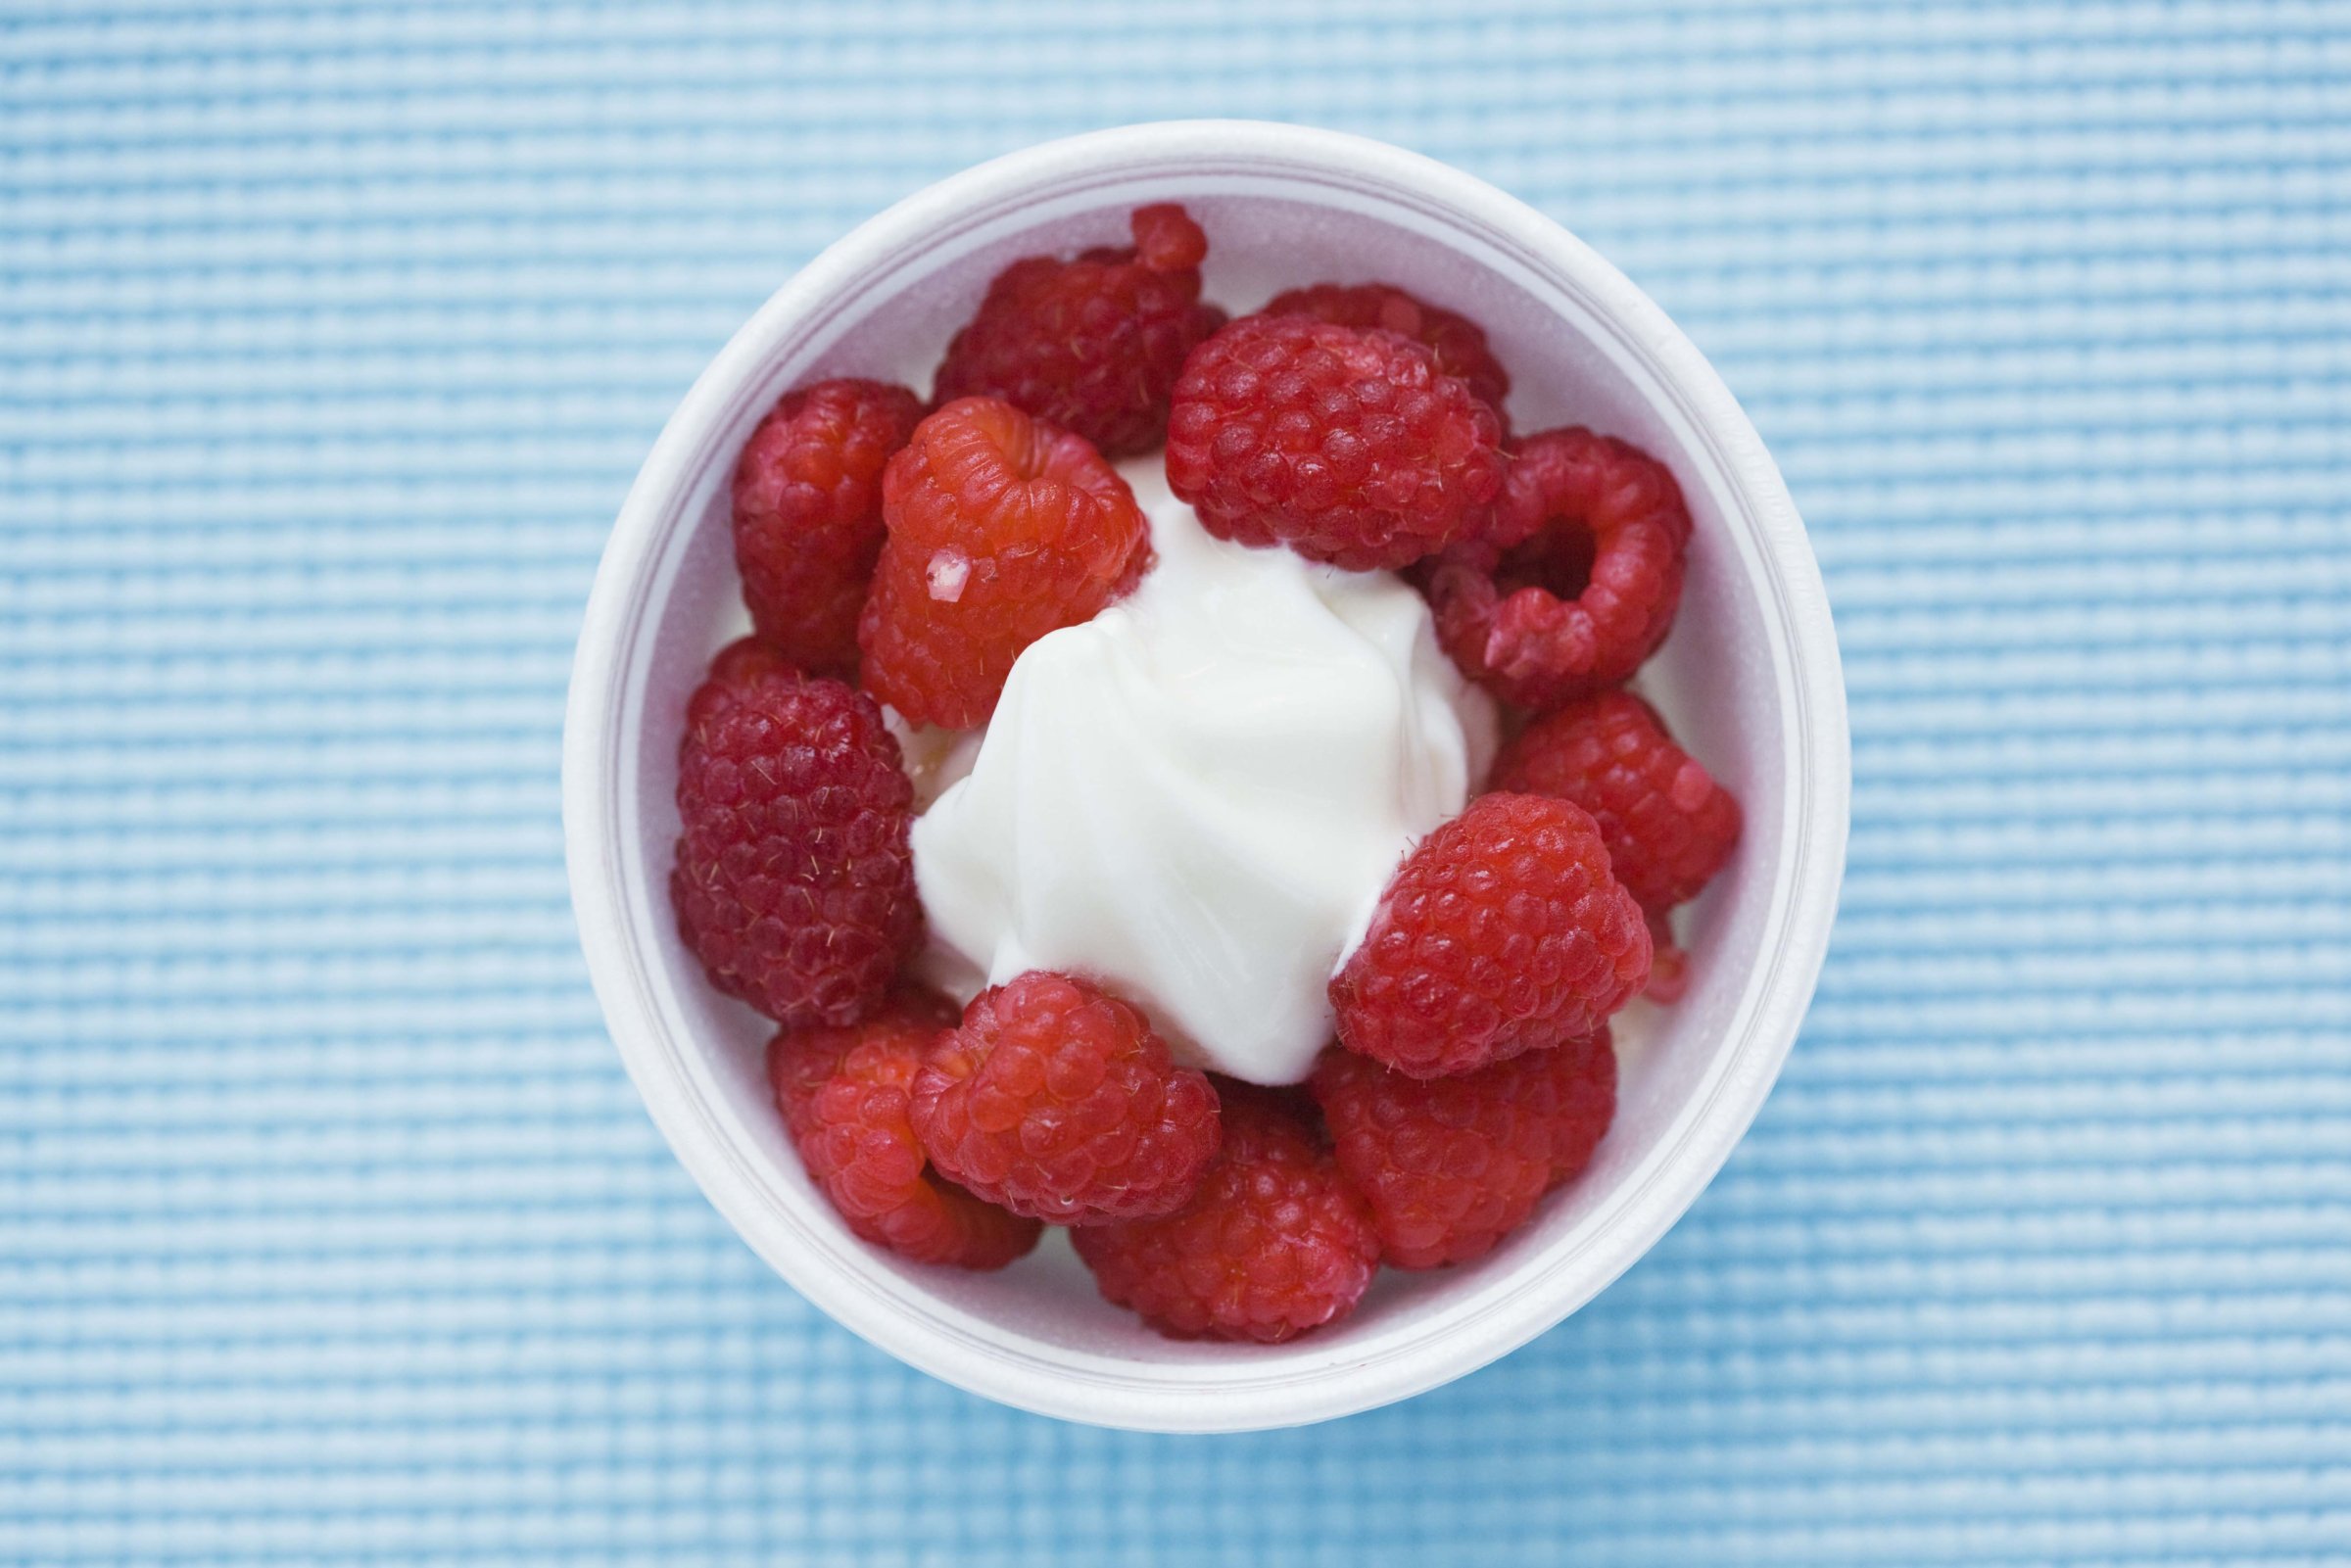 Yogurt with raspberries